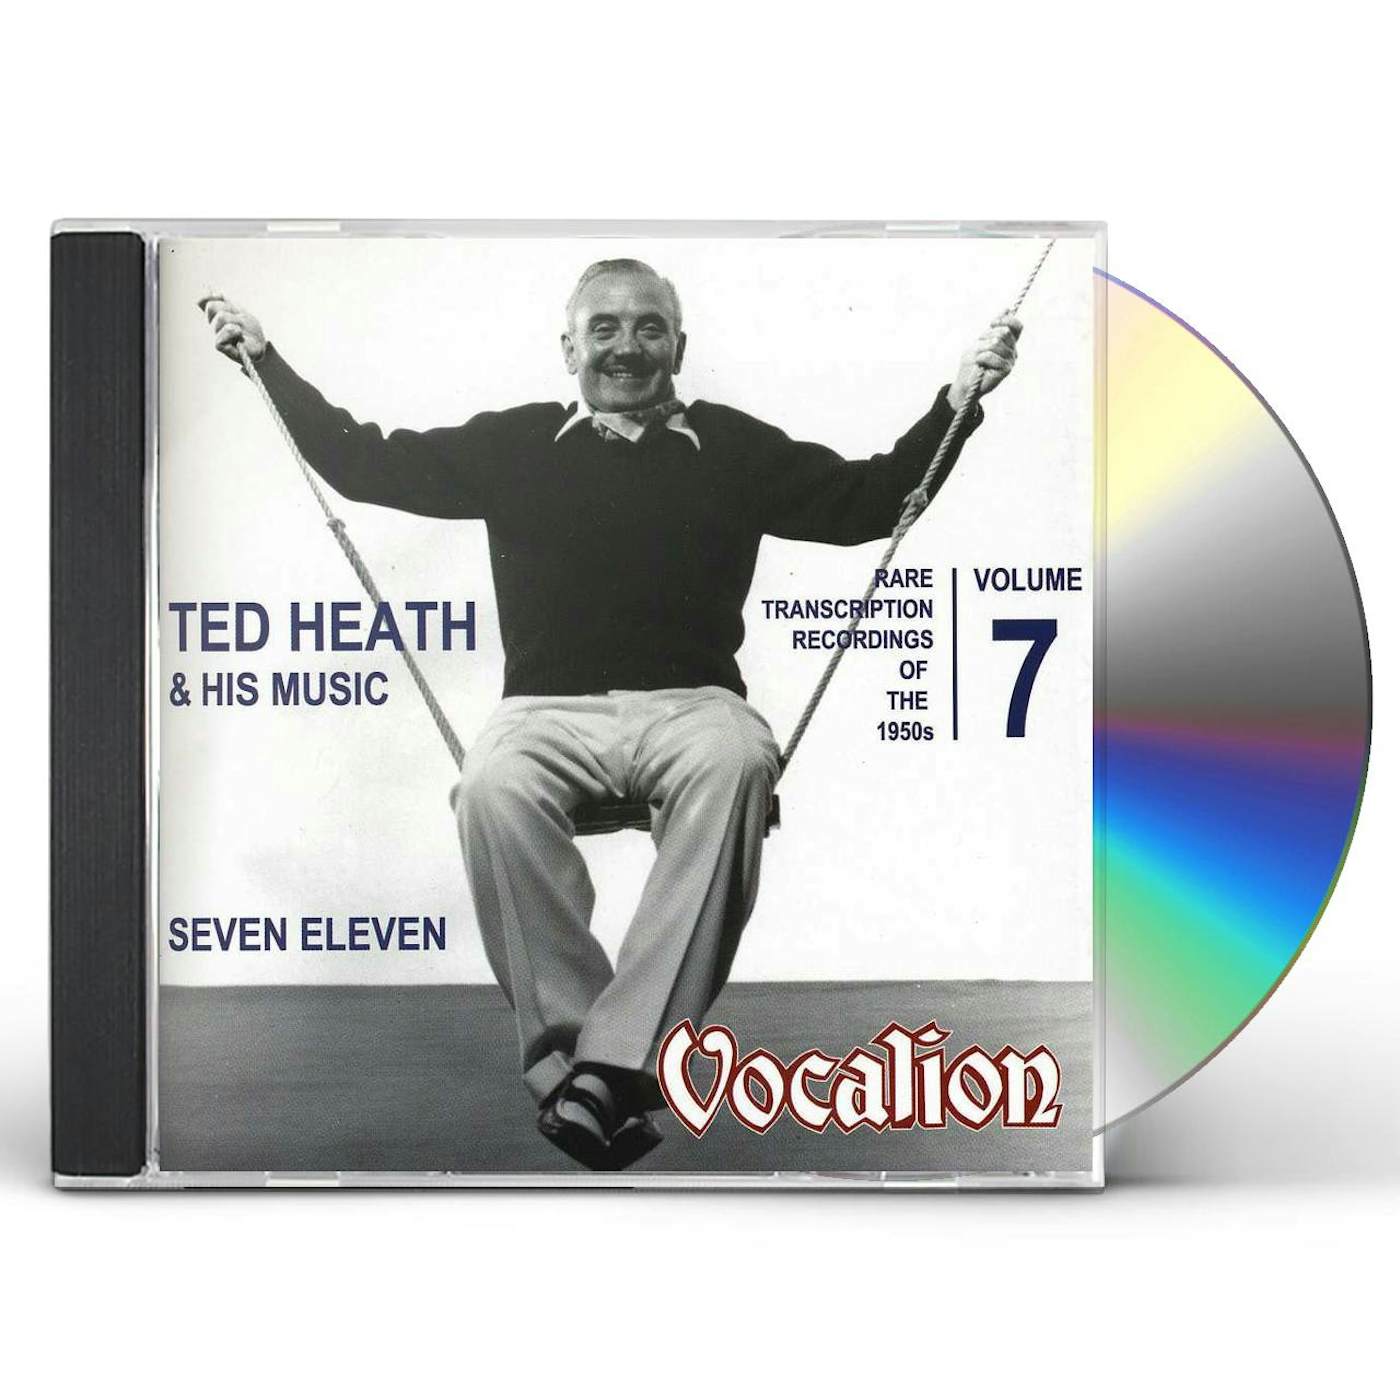 Ted Heath RARE TRANSCRIPTION RECORDINGS OF 1950S 7 CD